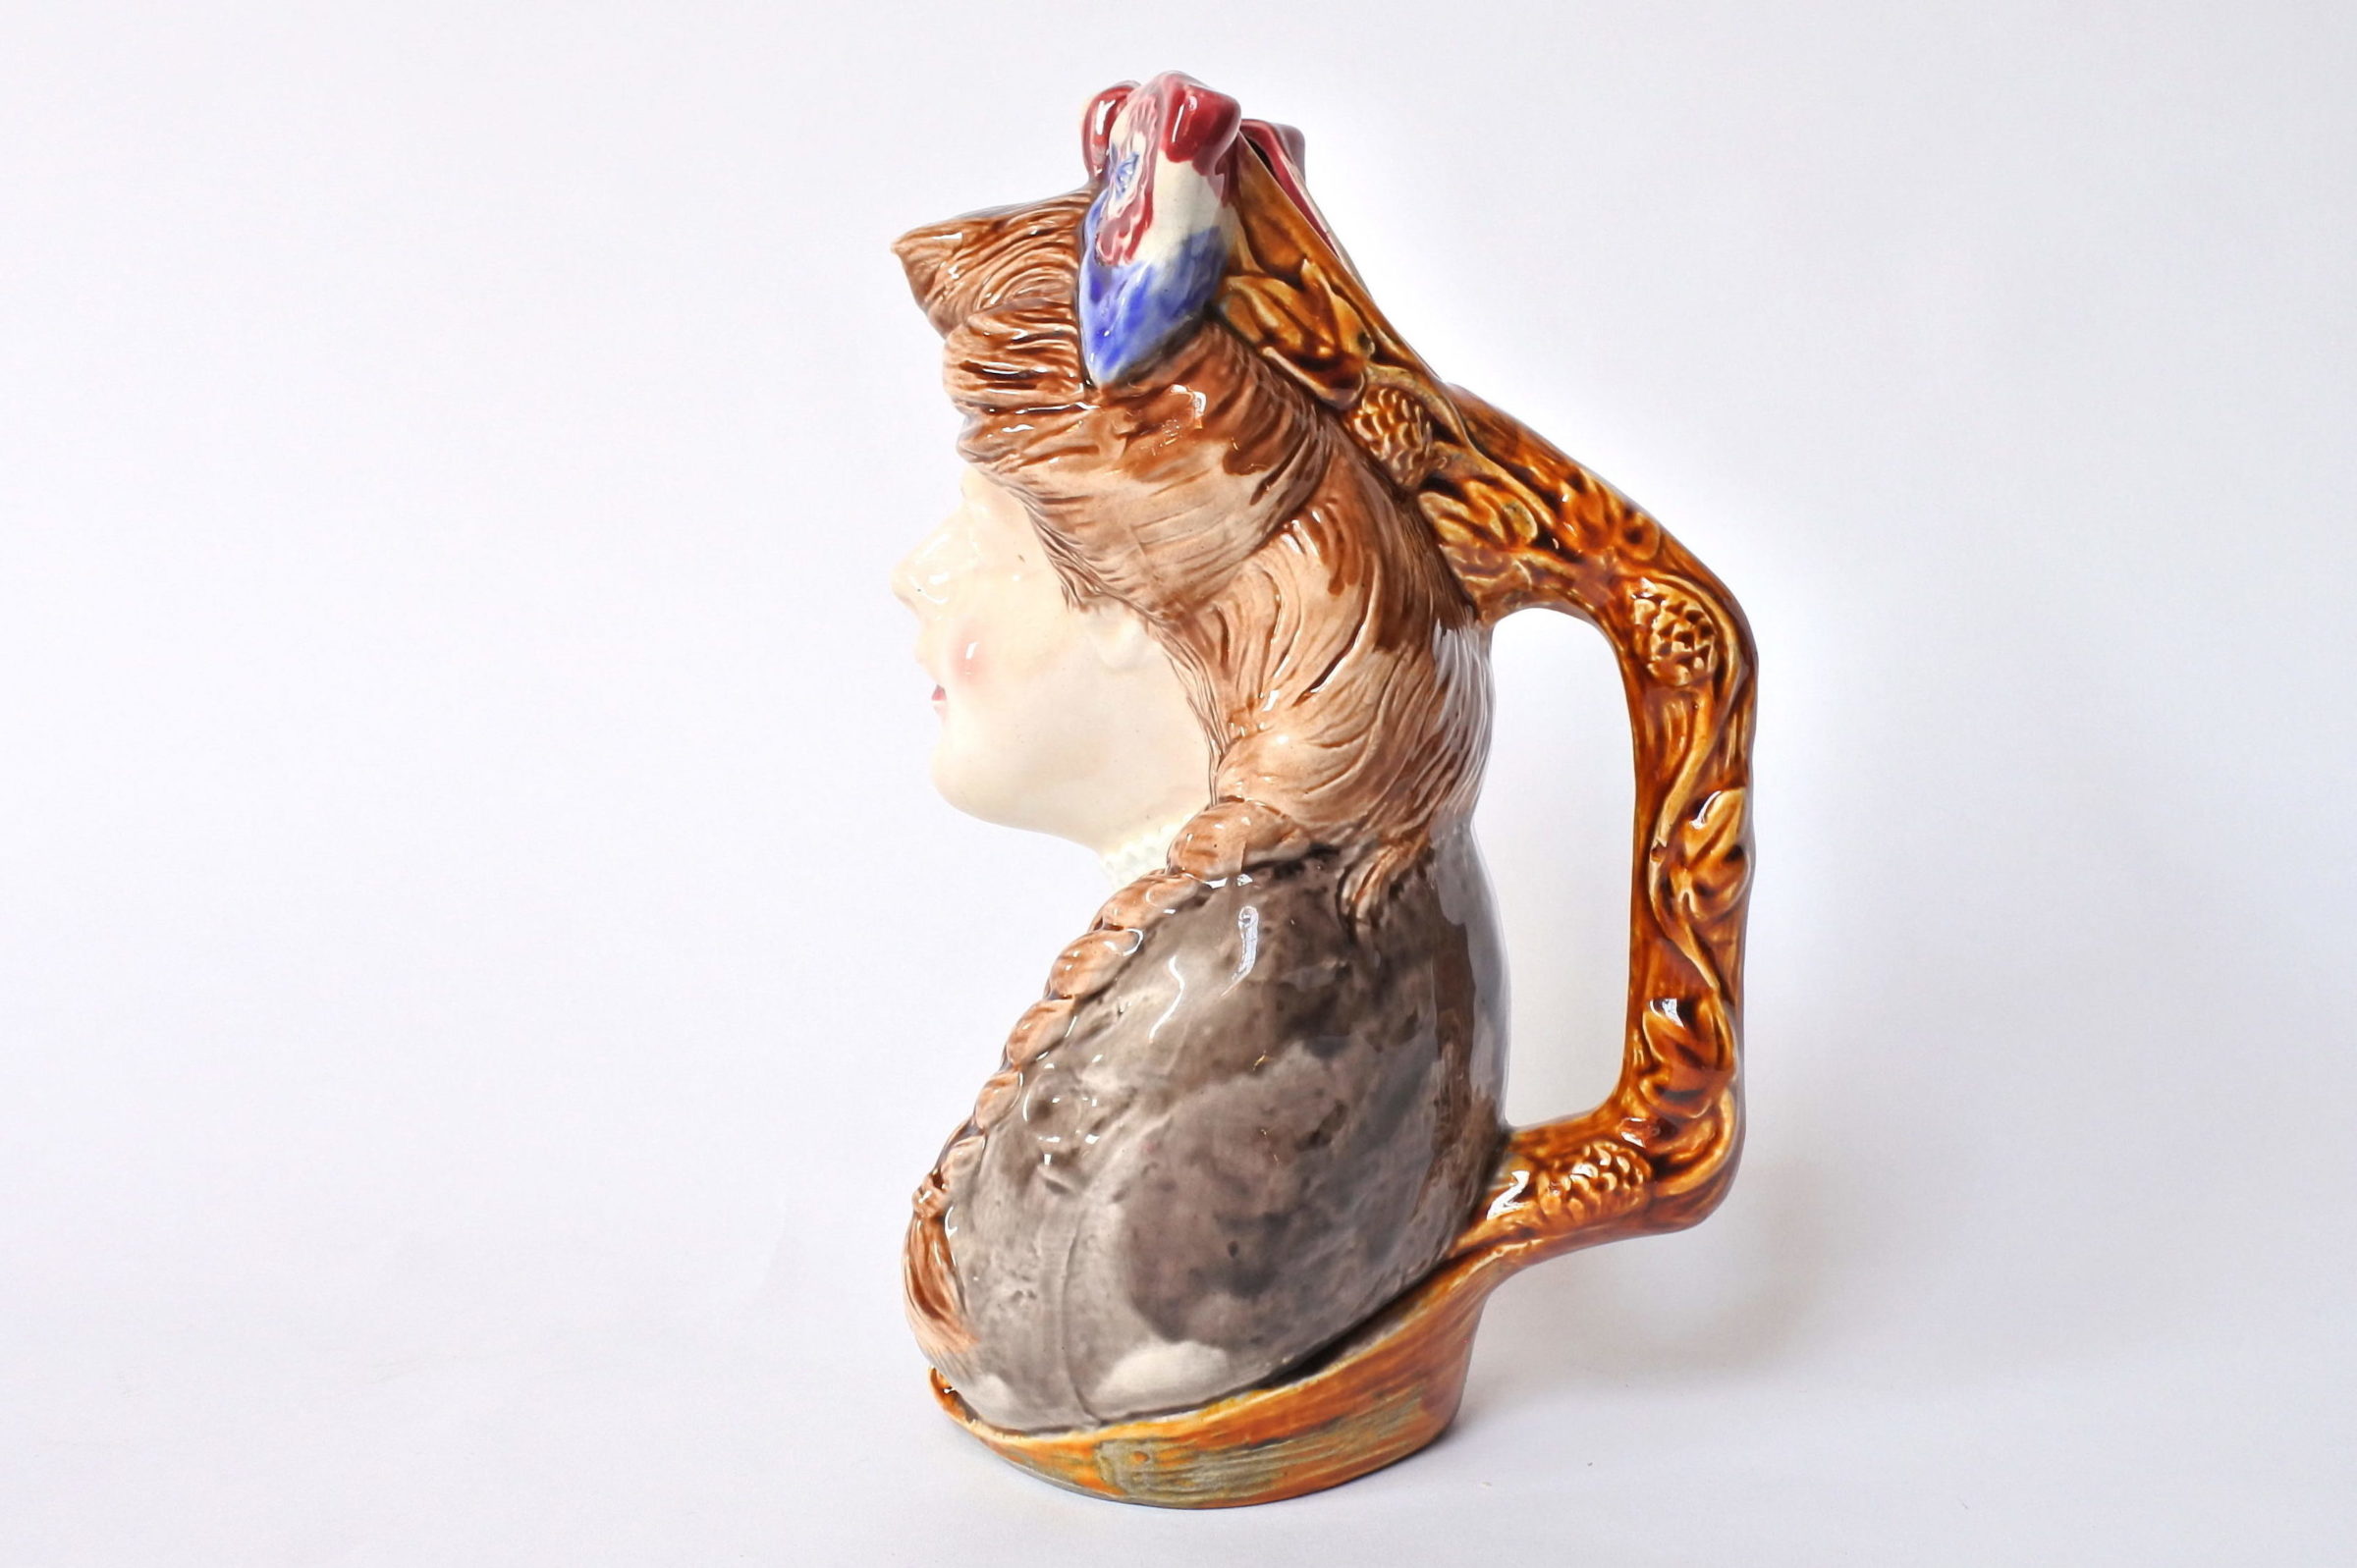 Brocca in ceramica barbotine a forma di volto donna - Onnaing n° 808 - 2